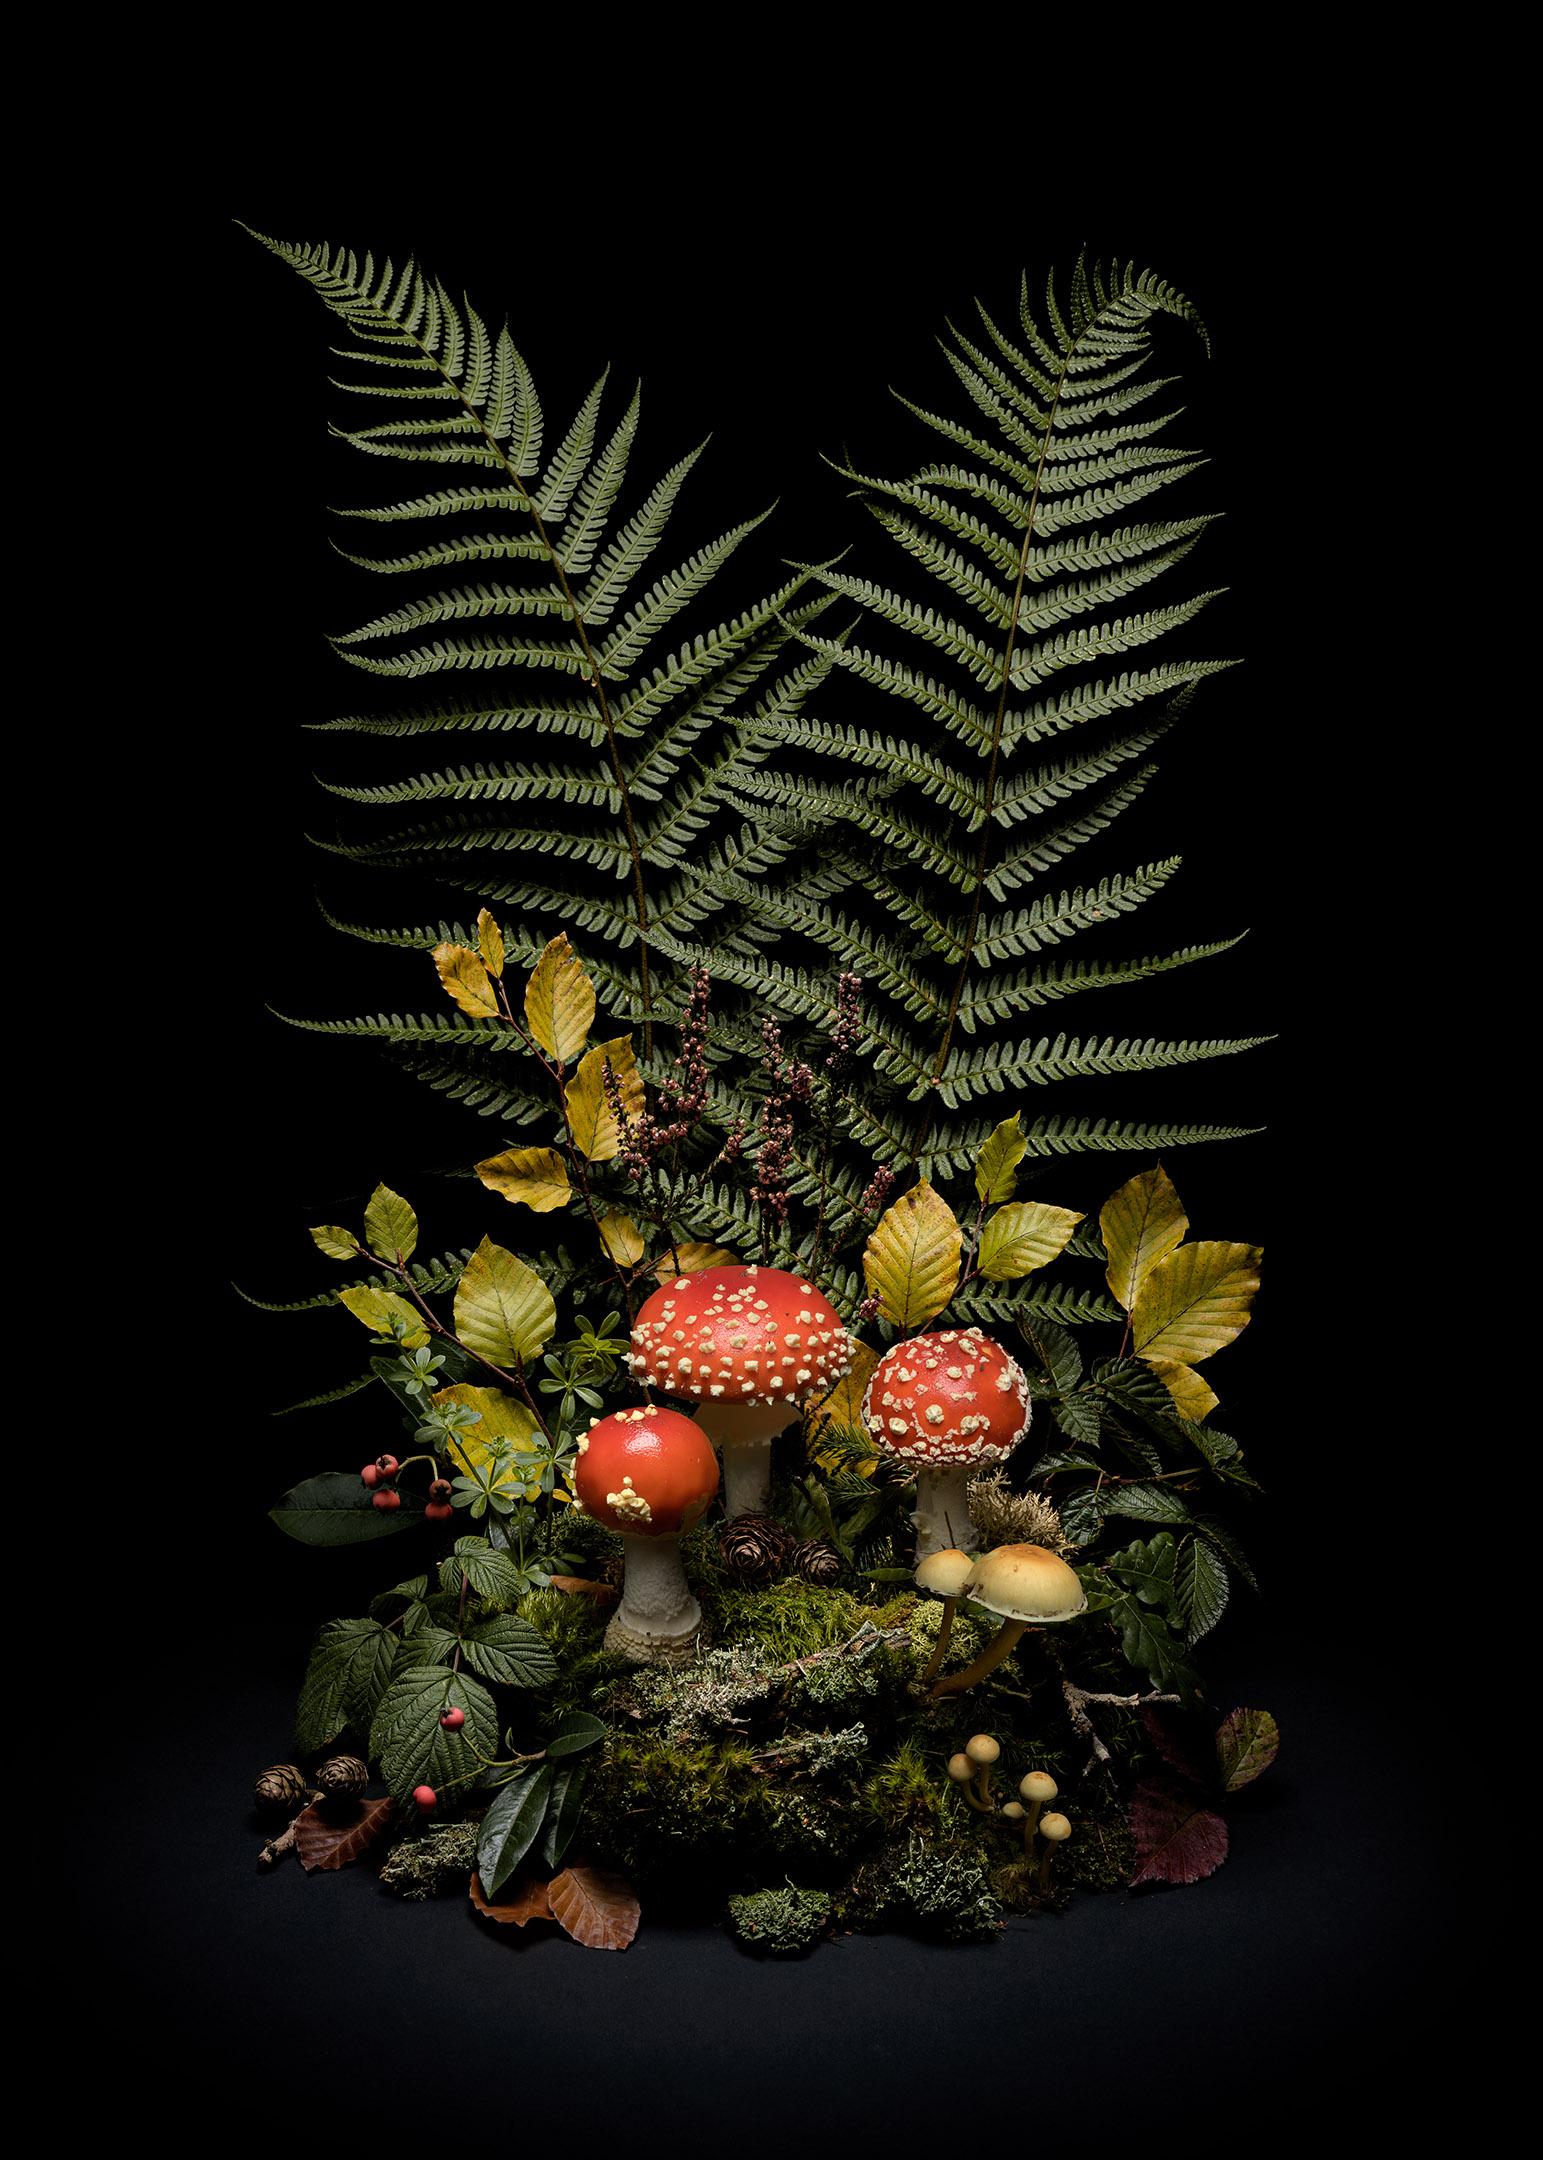 Jasper Goodall Still-Life Photograph - Dark Flora Print Fly Agaric A floral arrangements x 3 Prints Set